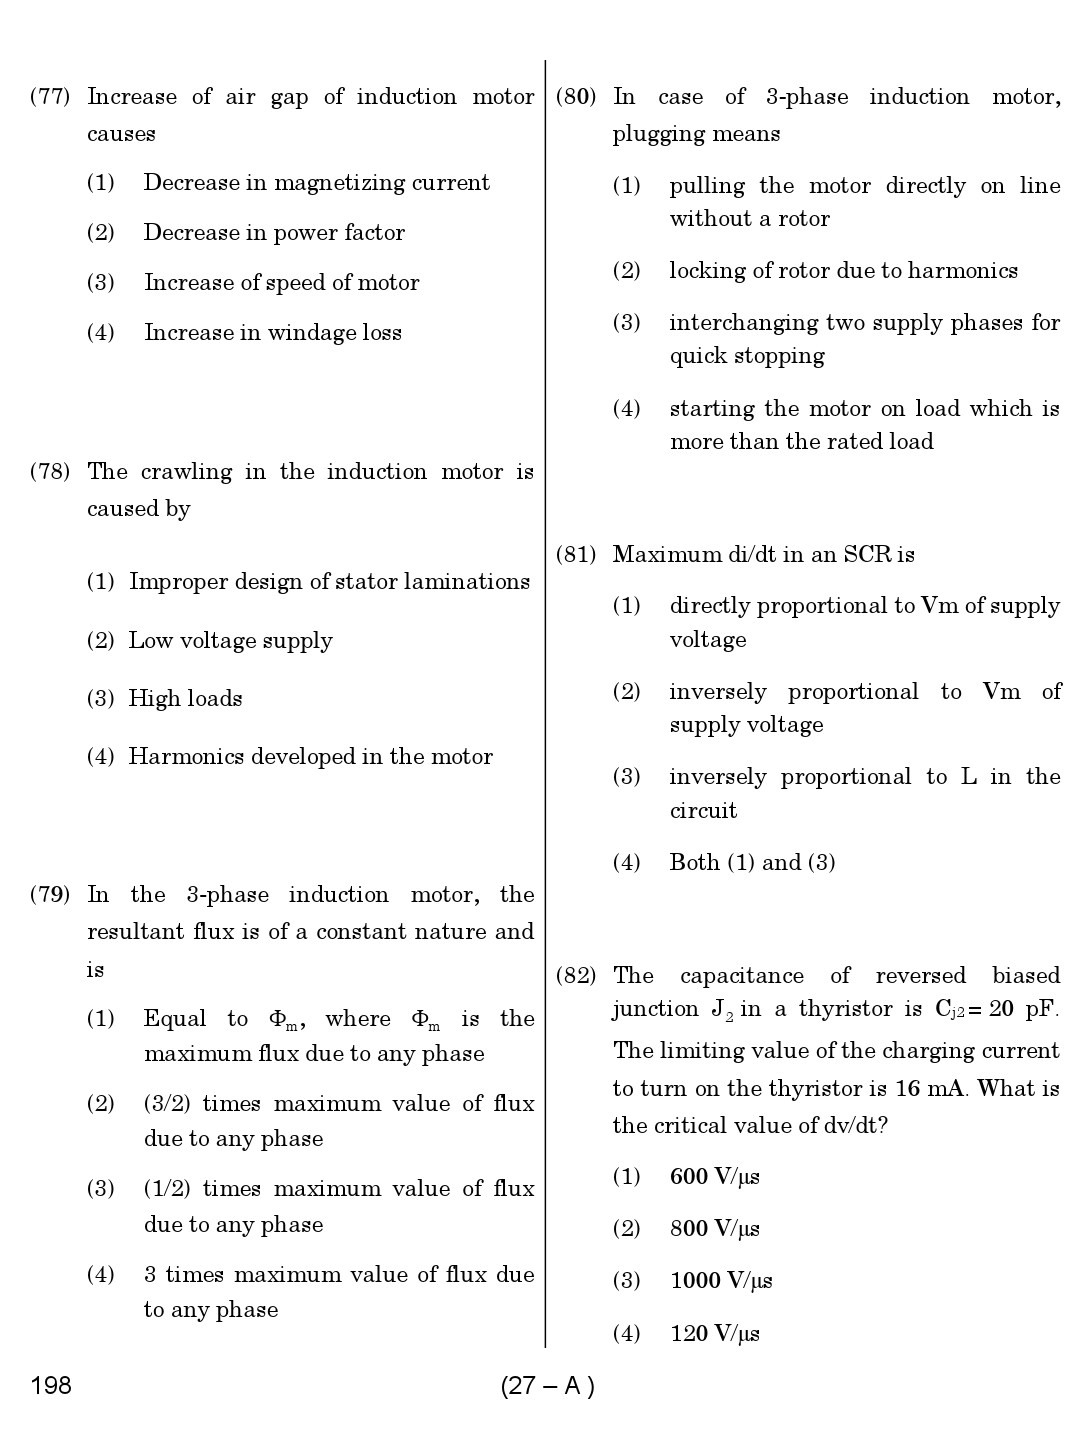 Karnataka PSC Junior Engineer Electrical Exam Sample Question Paper 27